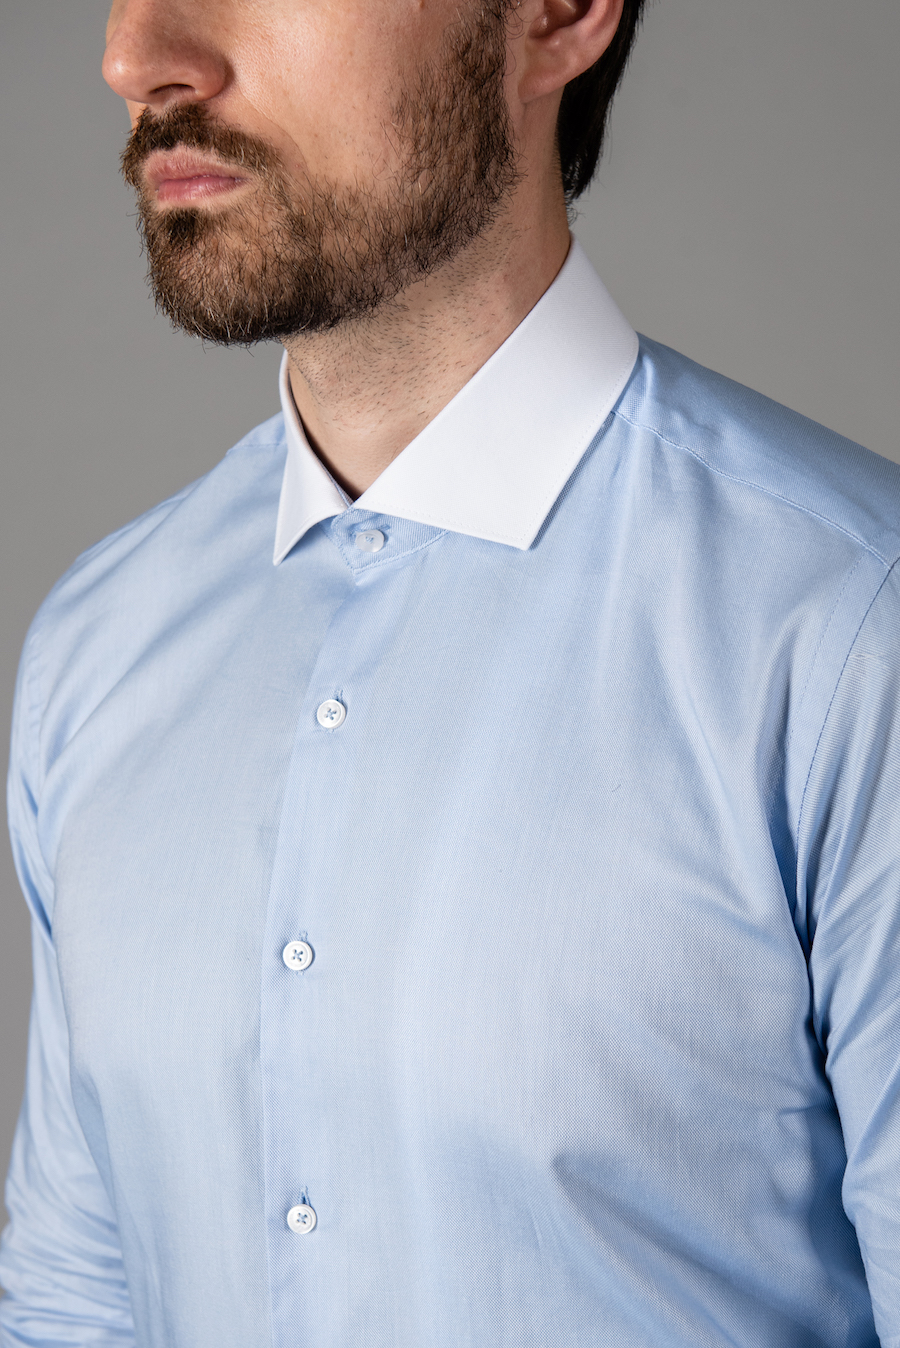 Мужская рубашка slim fit голубого цвета. Арт.:5-1449-3